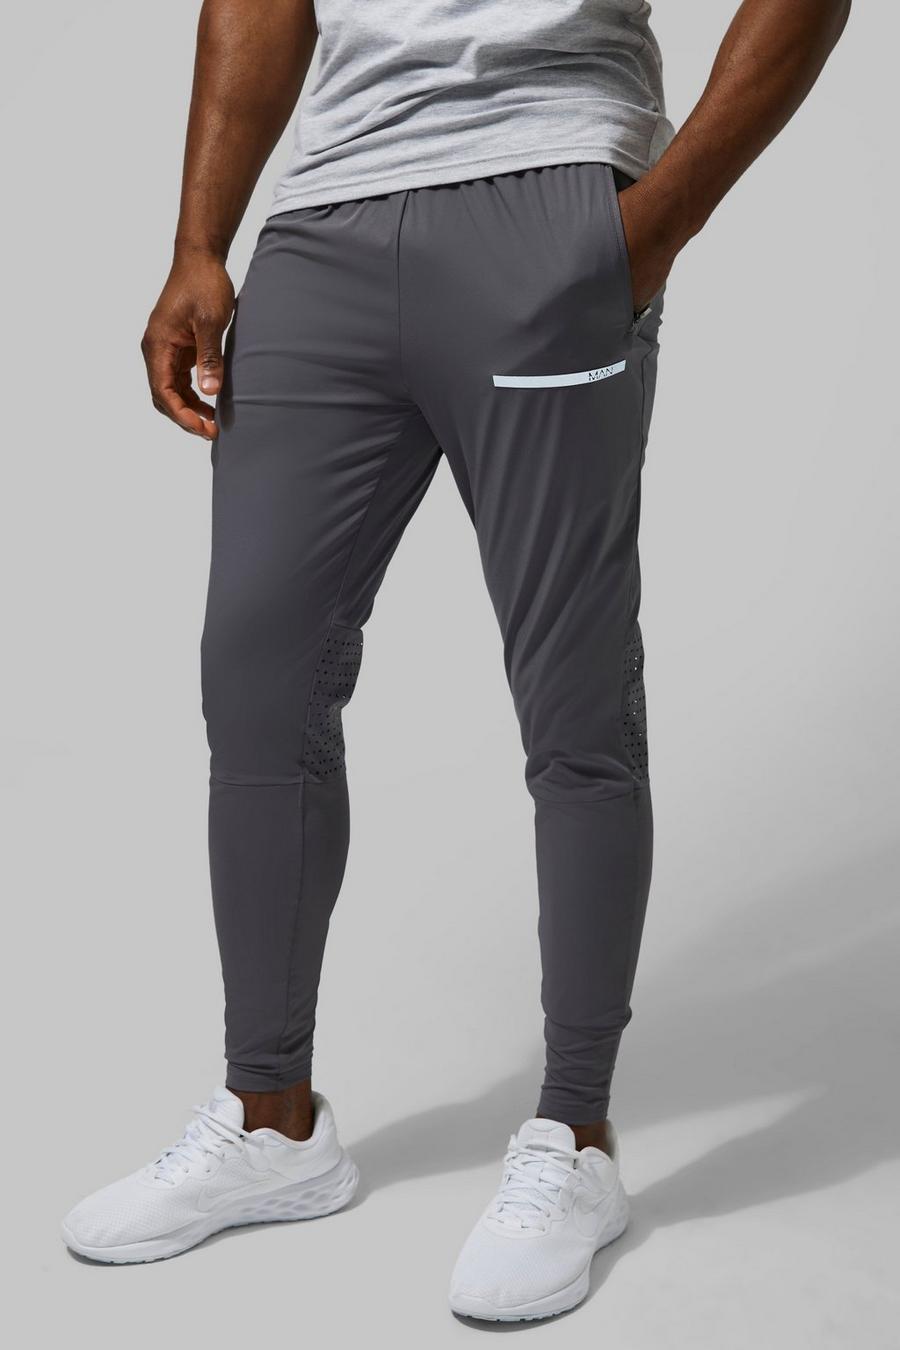 Pantaloni tuta Man Active perforati per alta performance, Charcoal image number 1